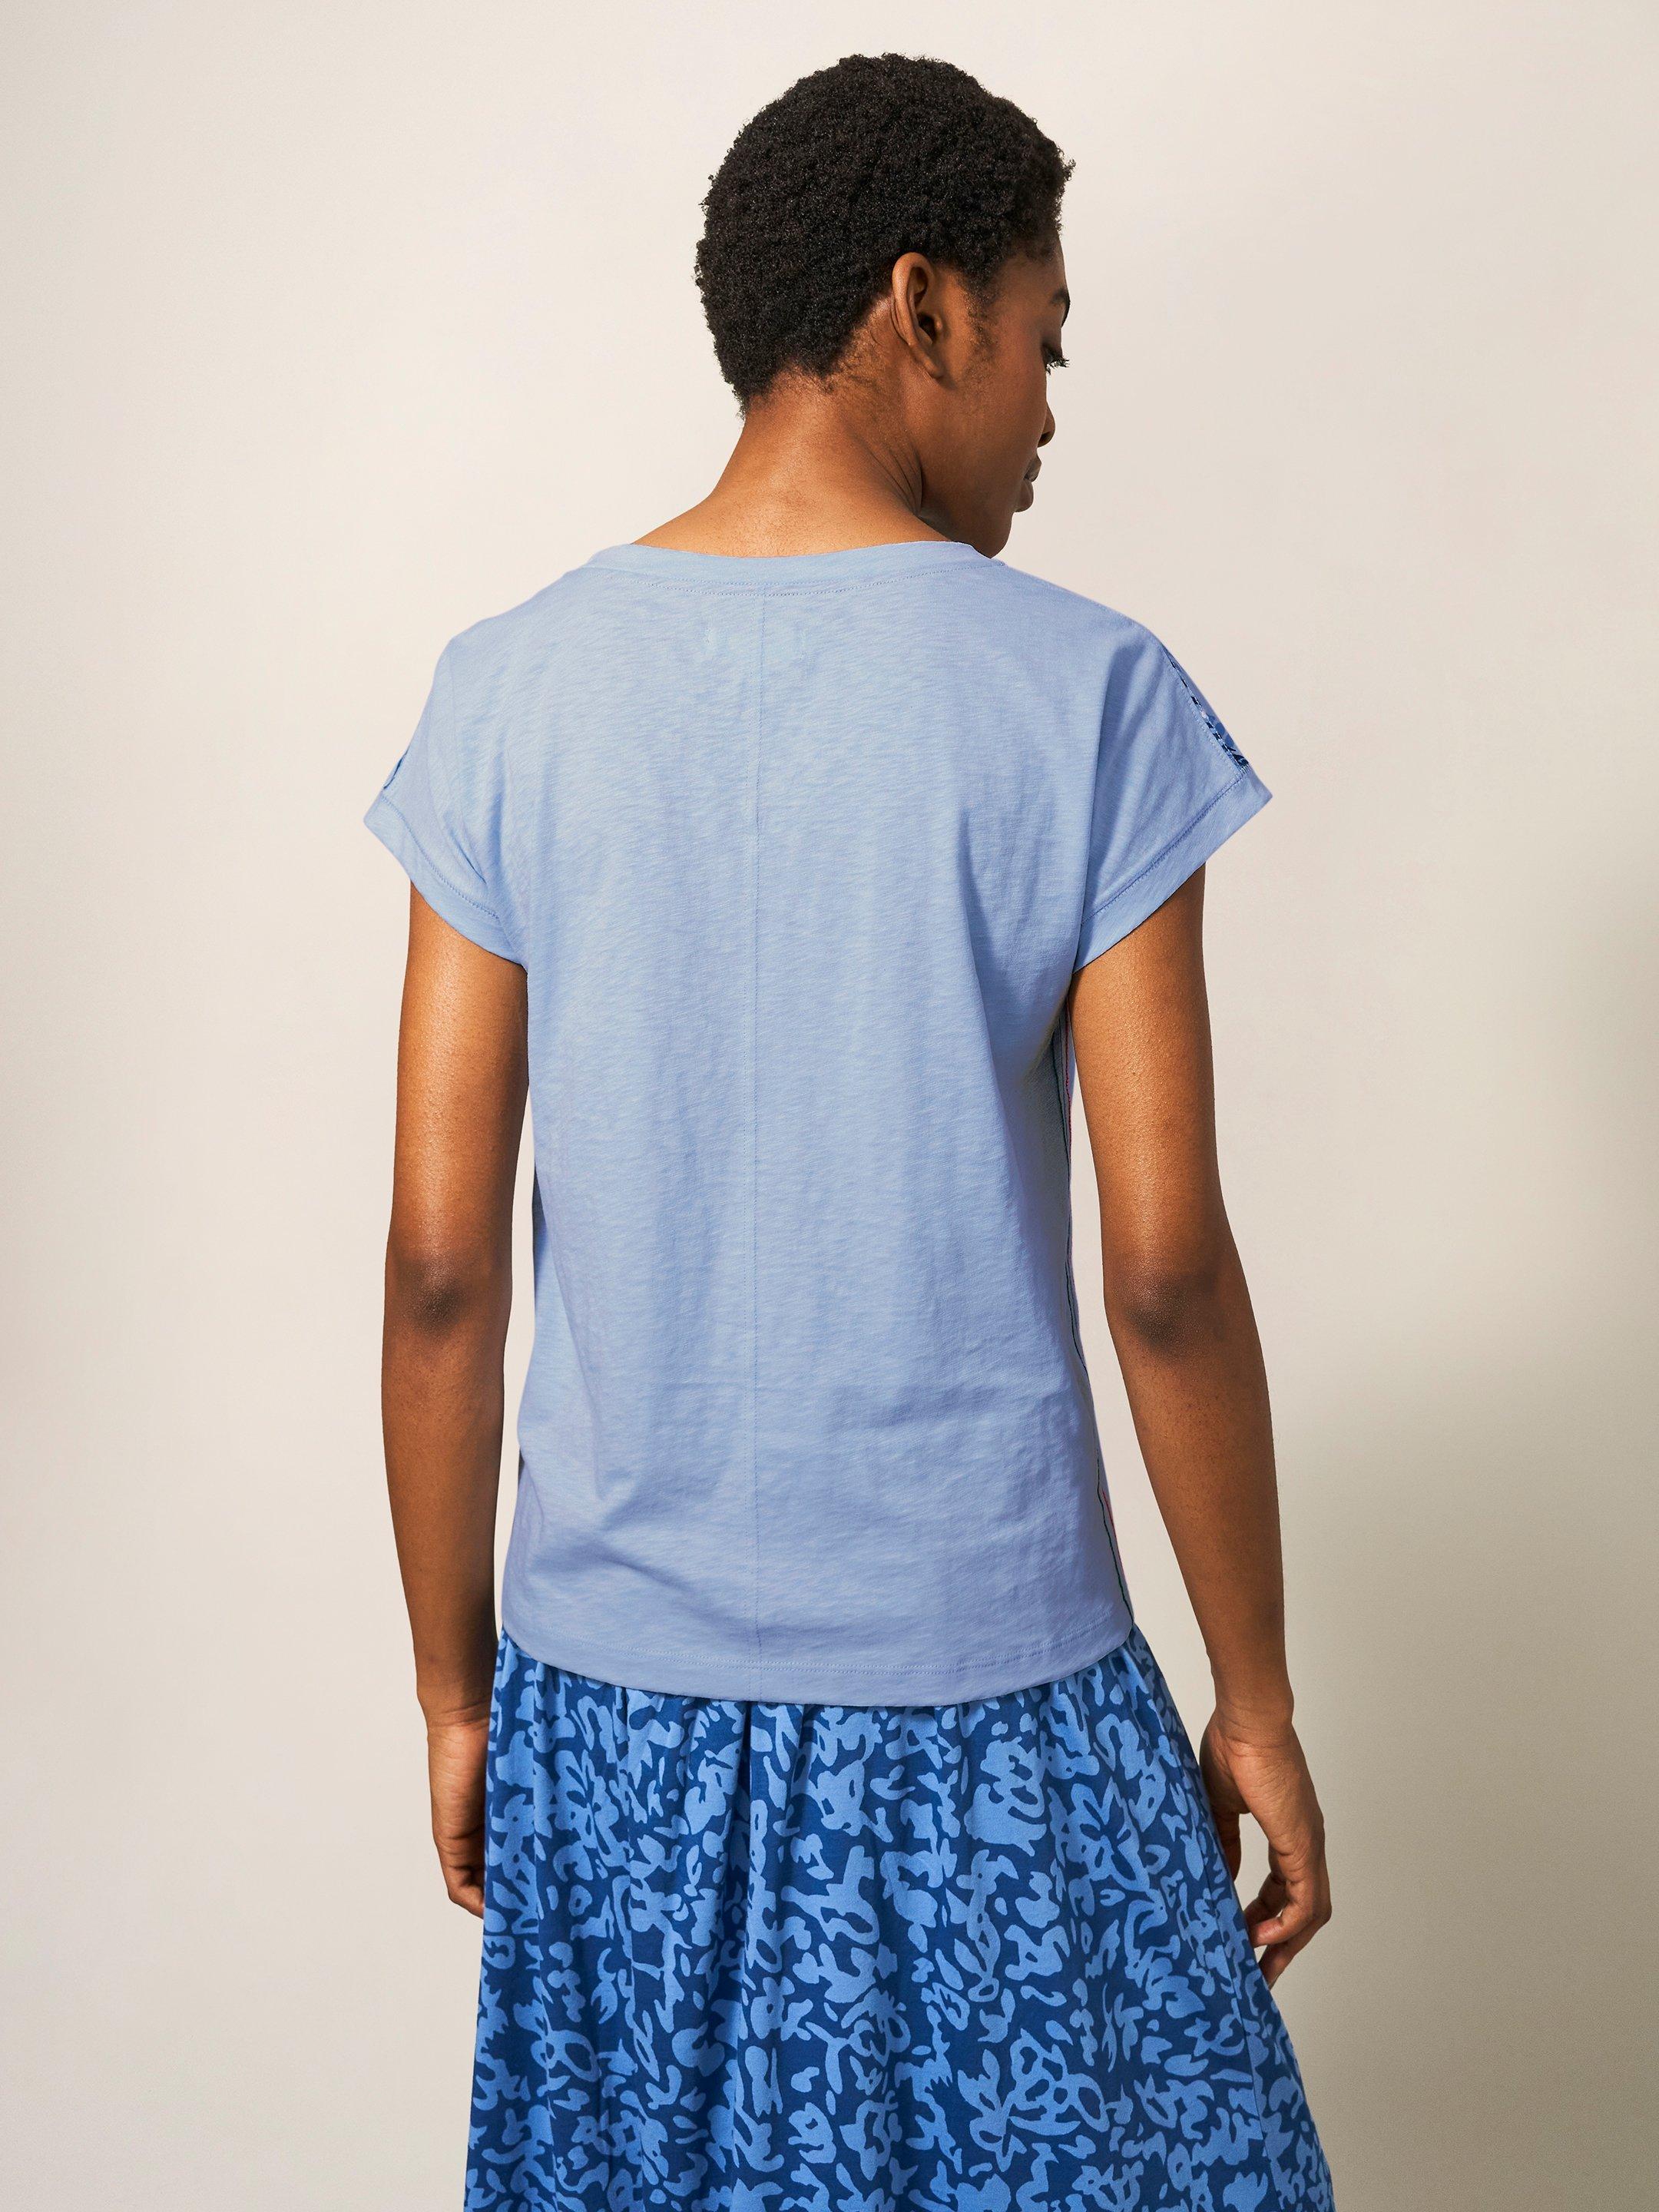 Nelly Print Teeshirt in BLUE MLT - MODEL BACK